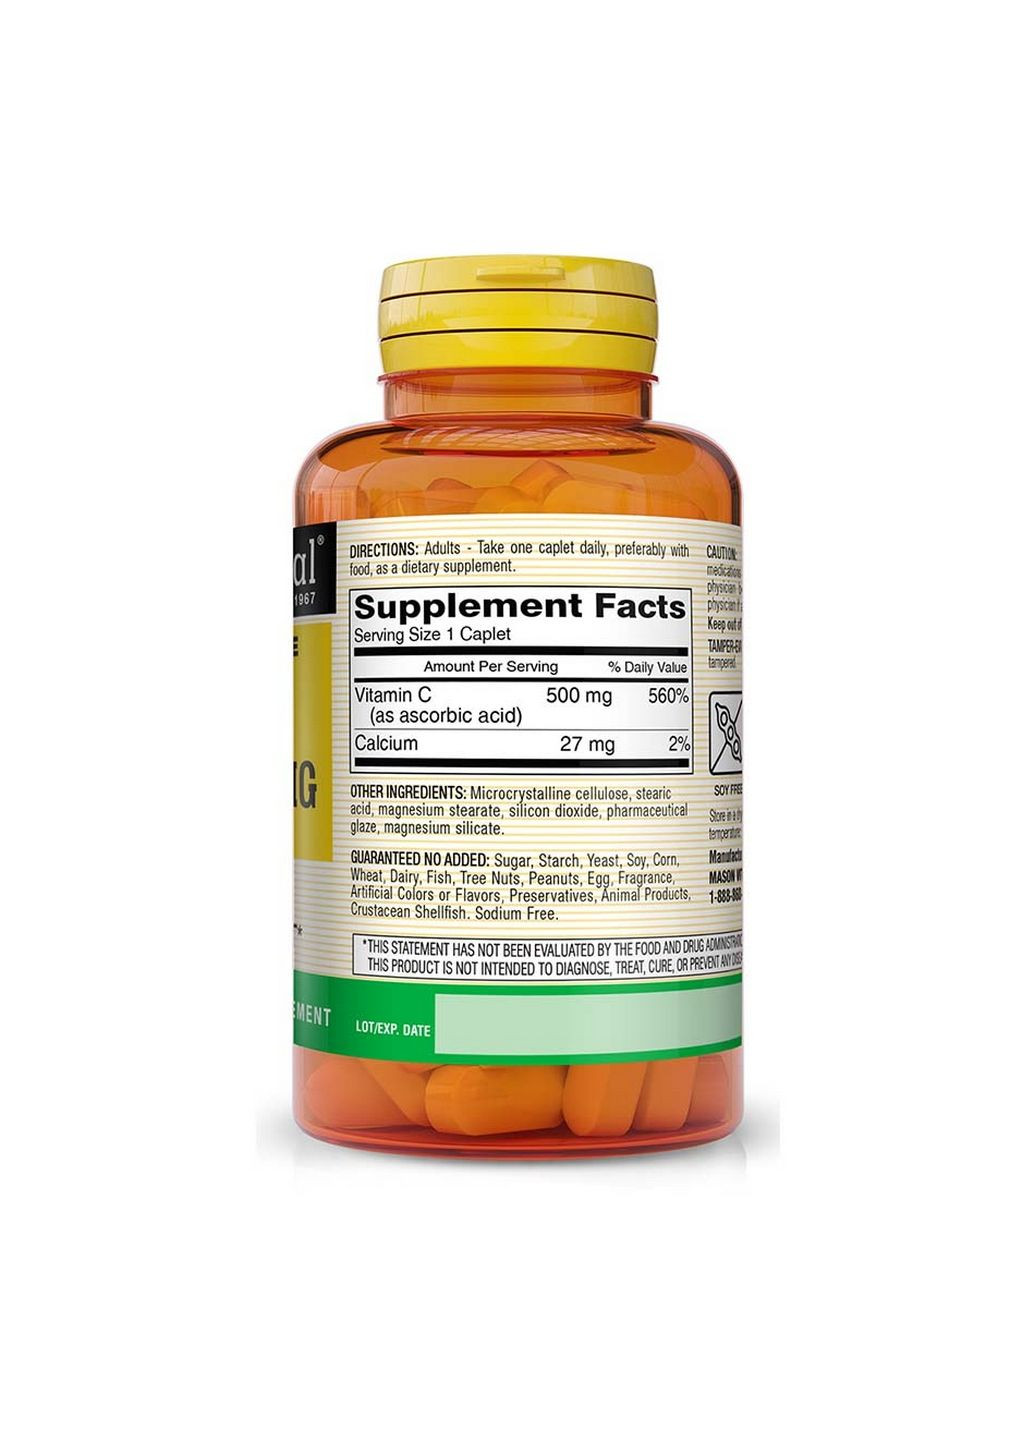 Витамины и минералы Vitamin C 500 mg Delayed Release, 100 каплет Mason Natural (293477496)